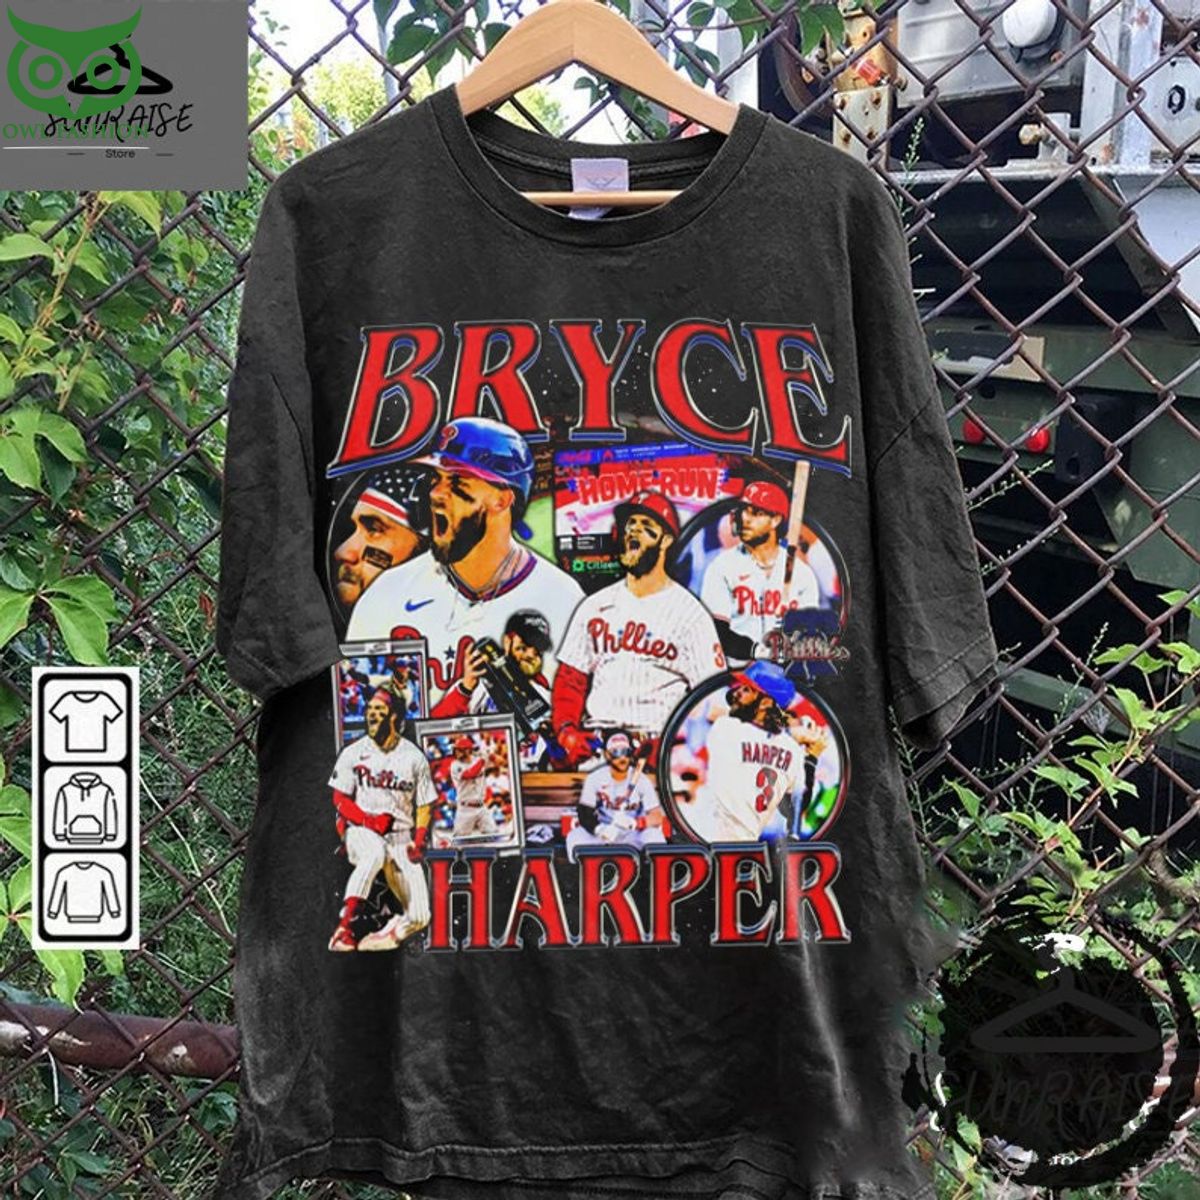 Bryce Harper trea turner shirt Baseball Bootleg MLB - Owl Fashion Shop